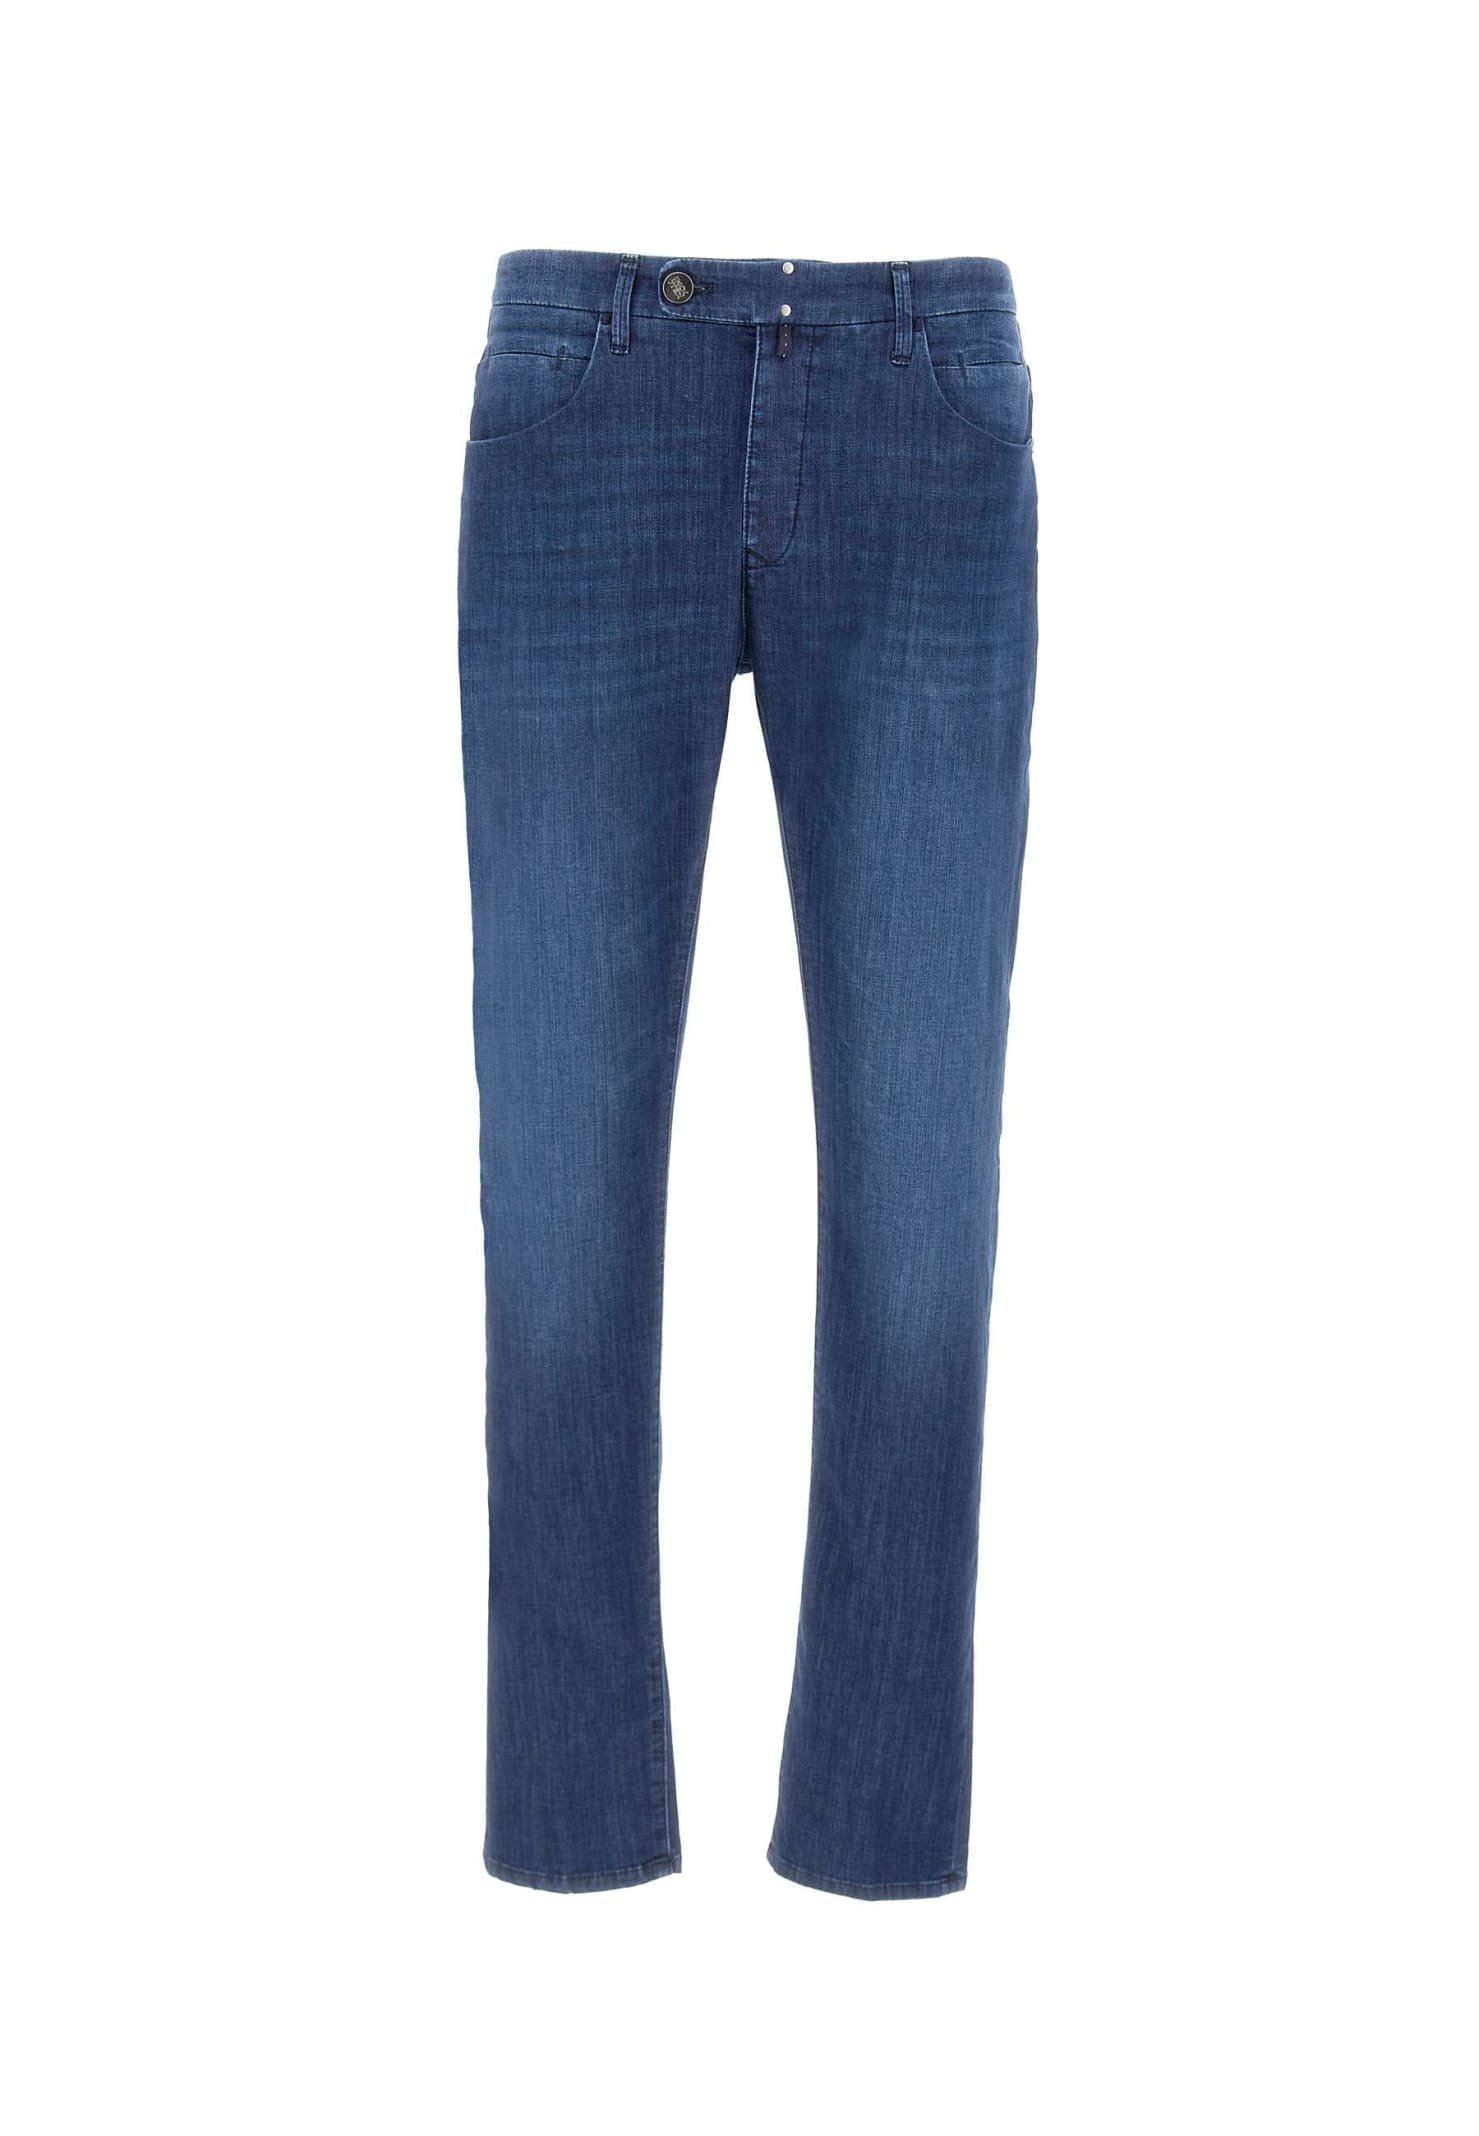 Shop Incotex Blue Division Tailor Made Jeans